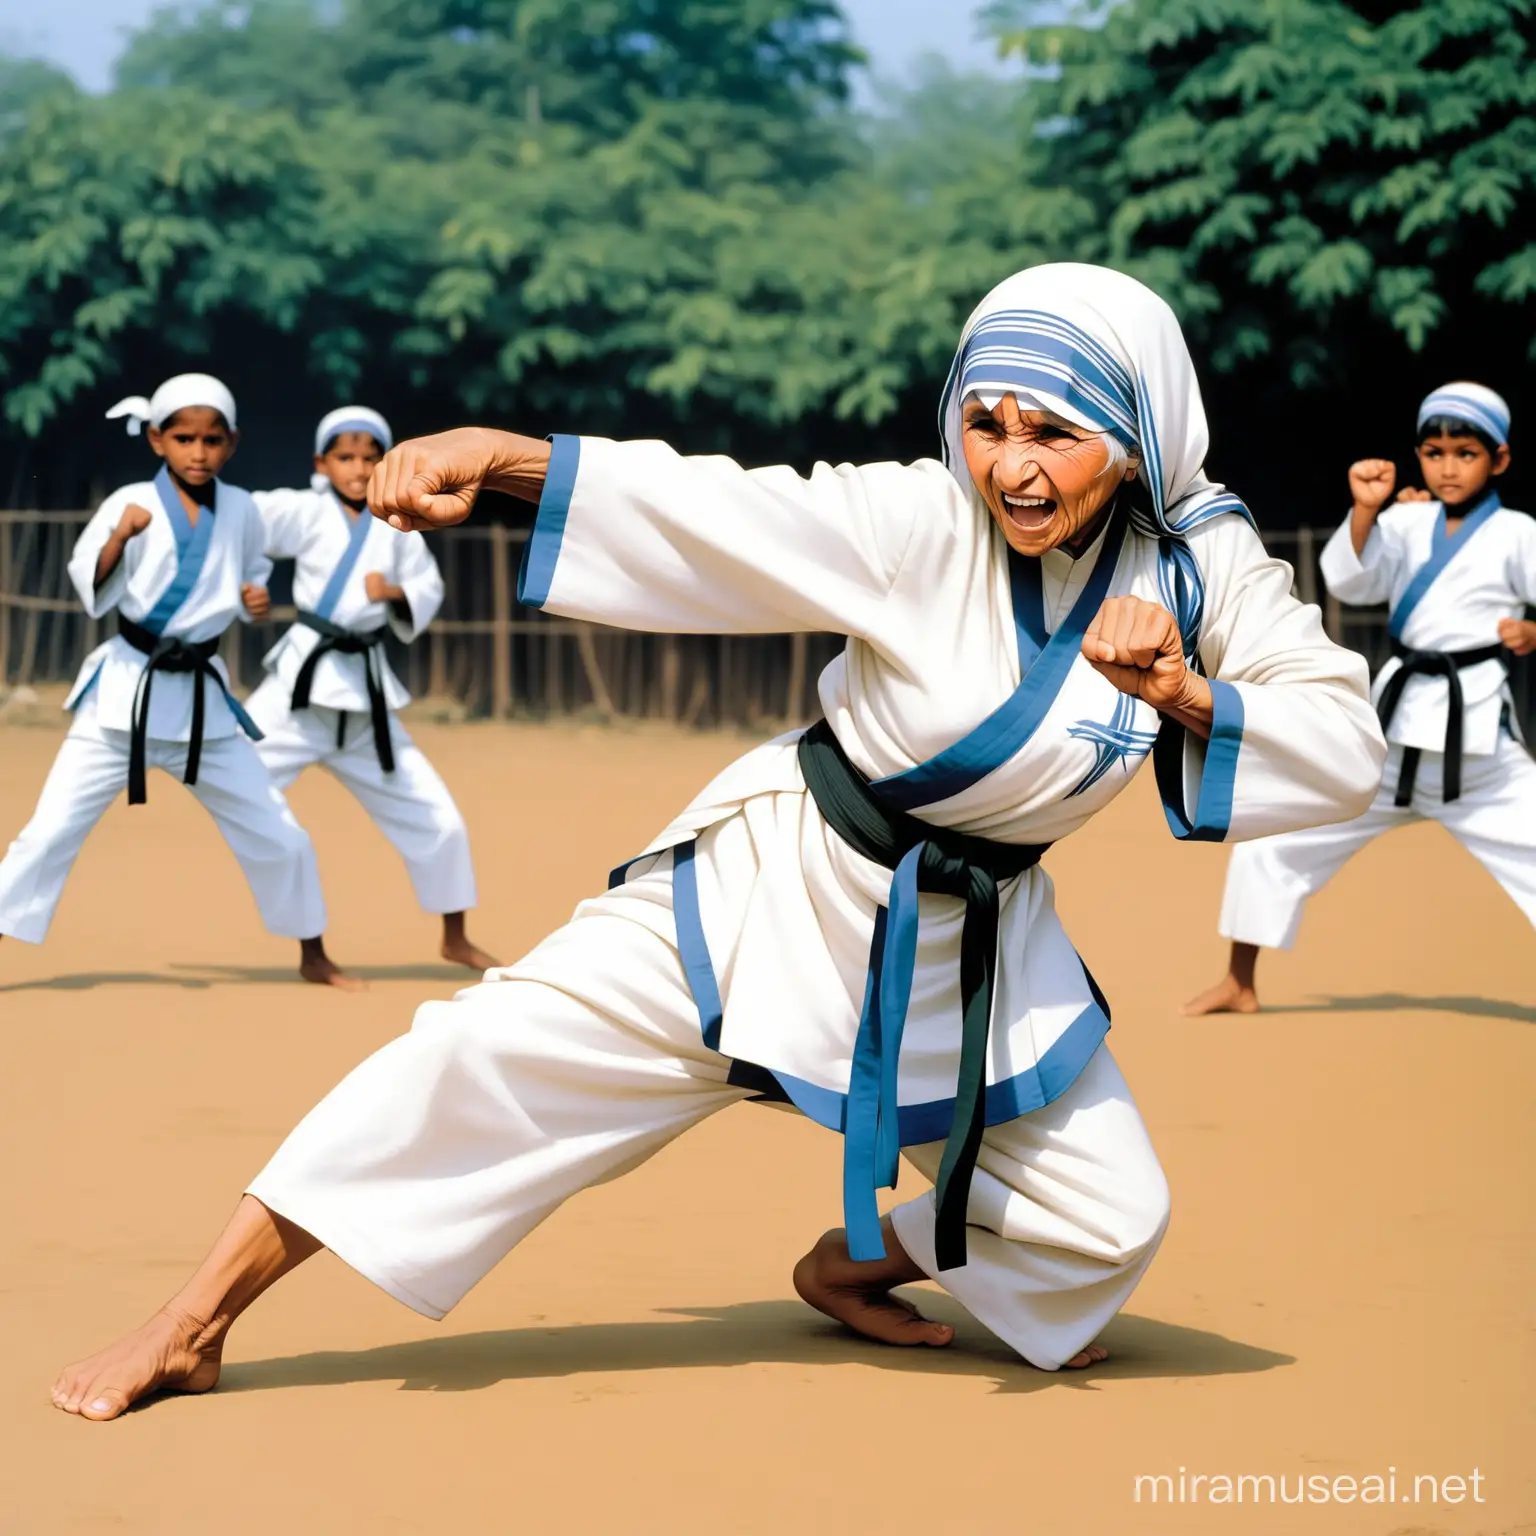 foto de madre teresa de calcutá a lutar estilo karate contra crianças pobres
